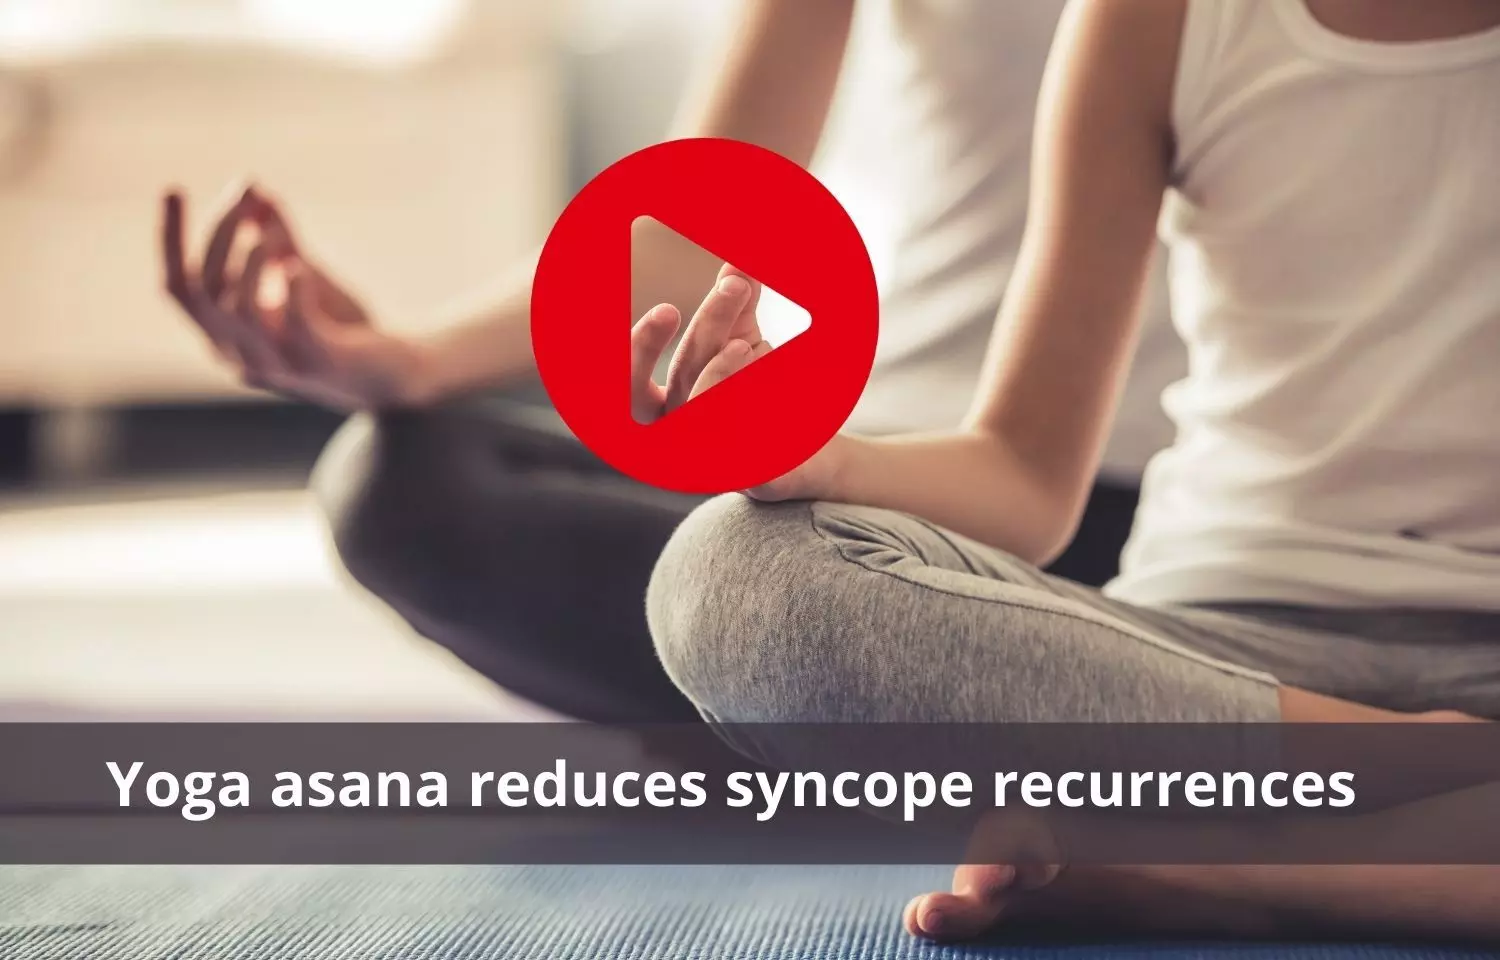 Yoga- tadasana to reduce syncope recurrences on practice